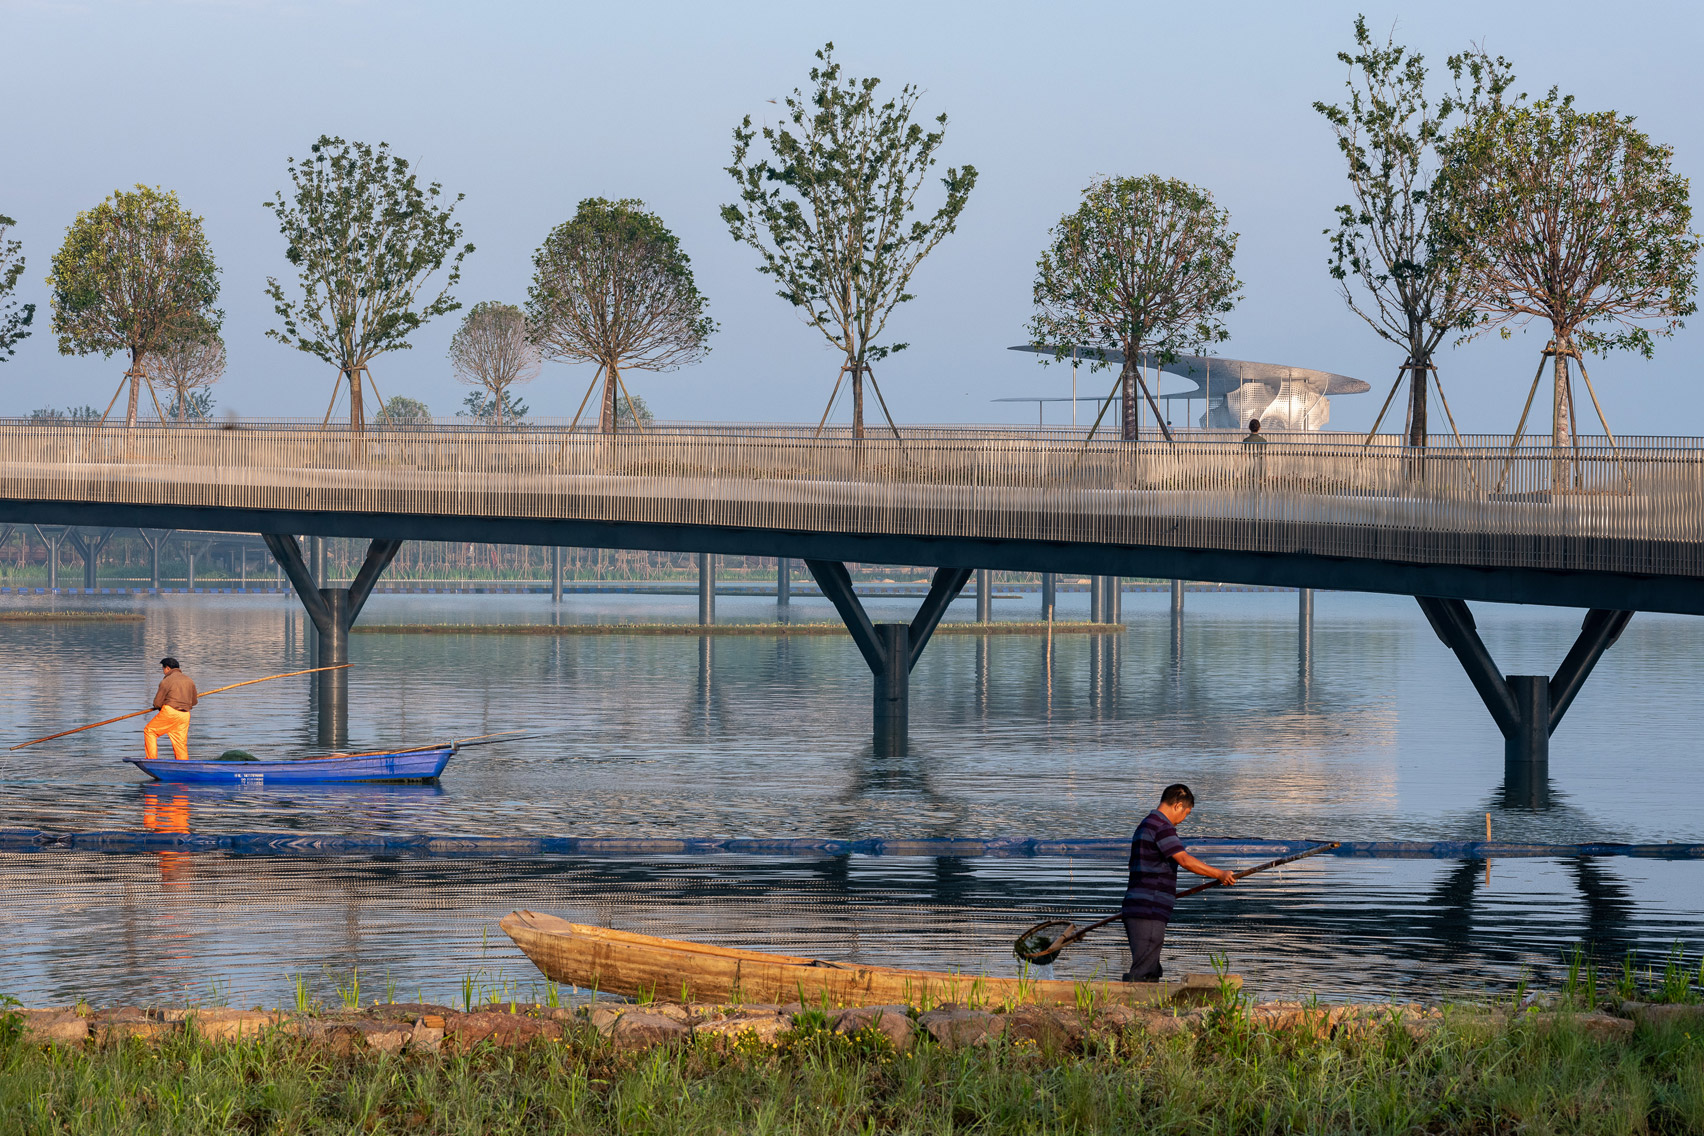 Yuandang Bridge